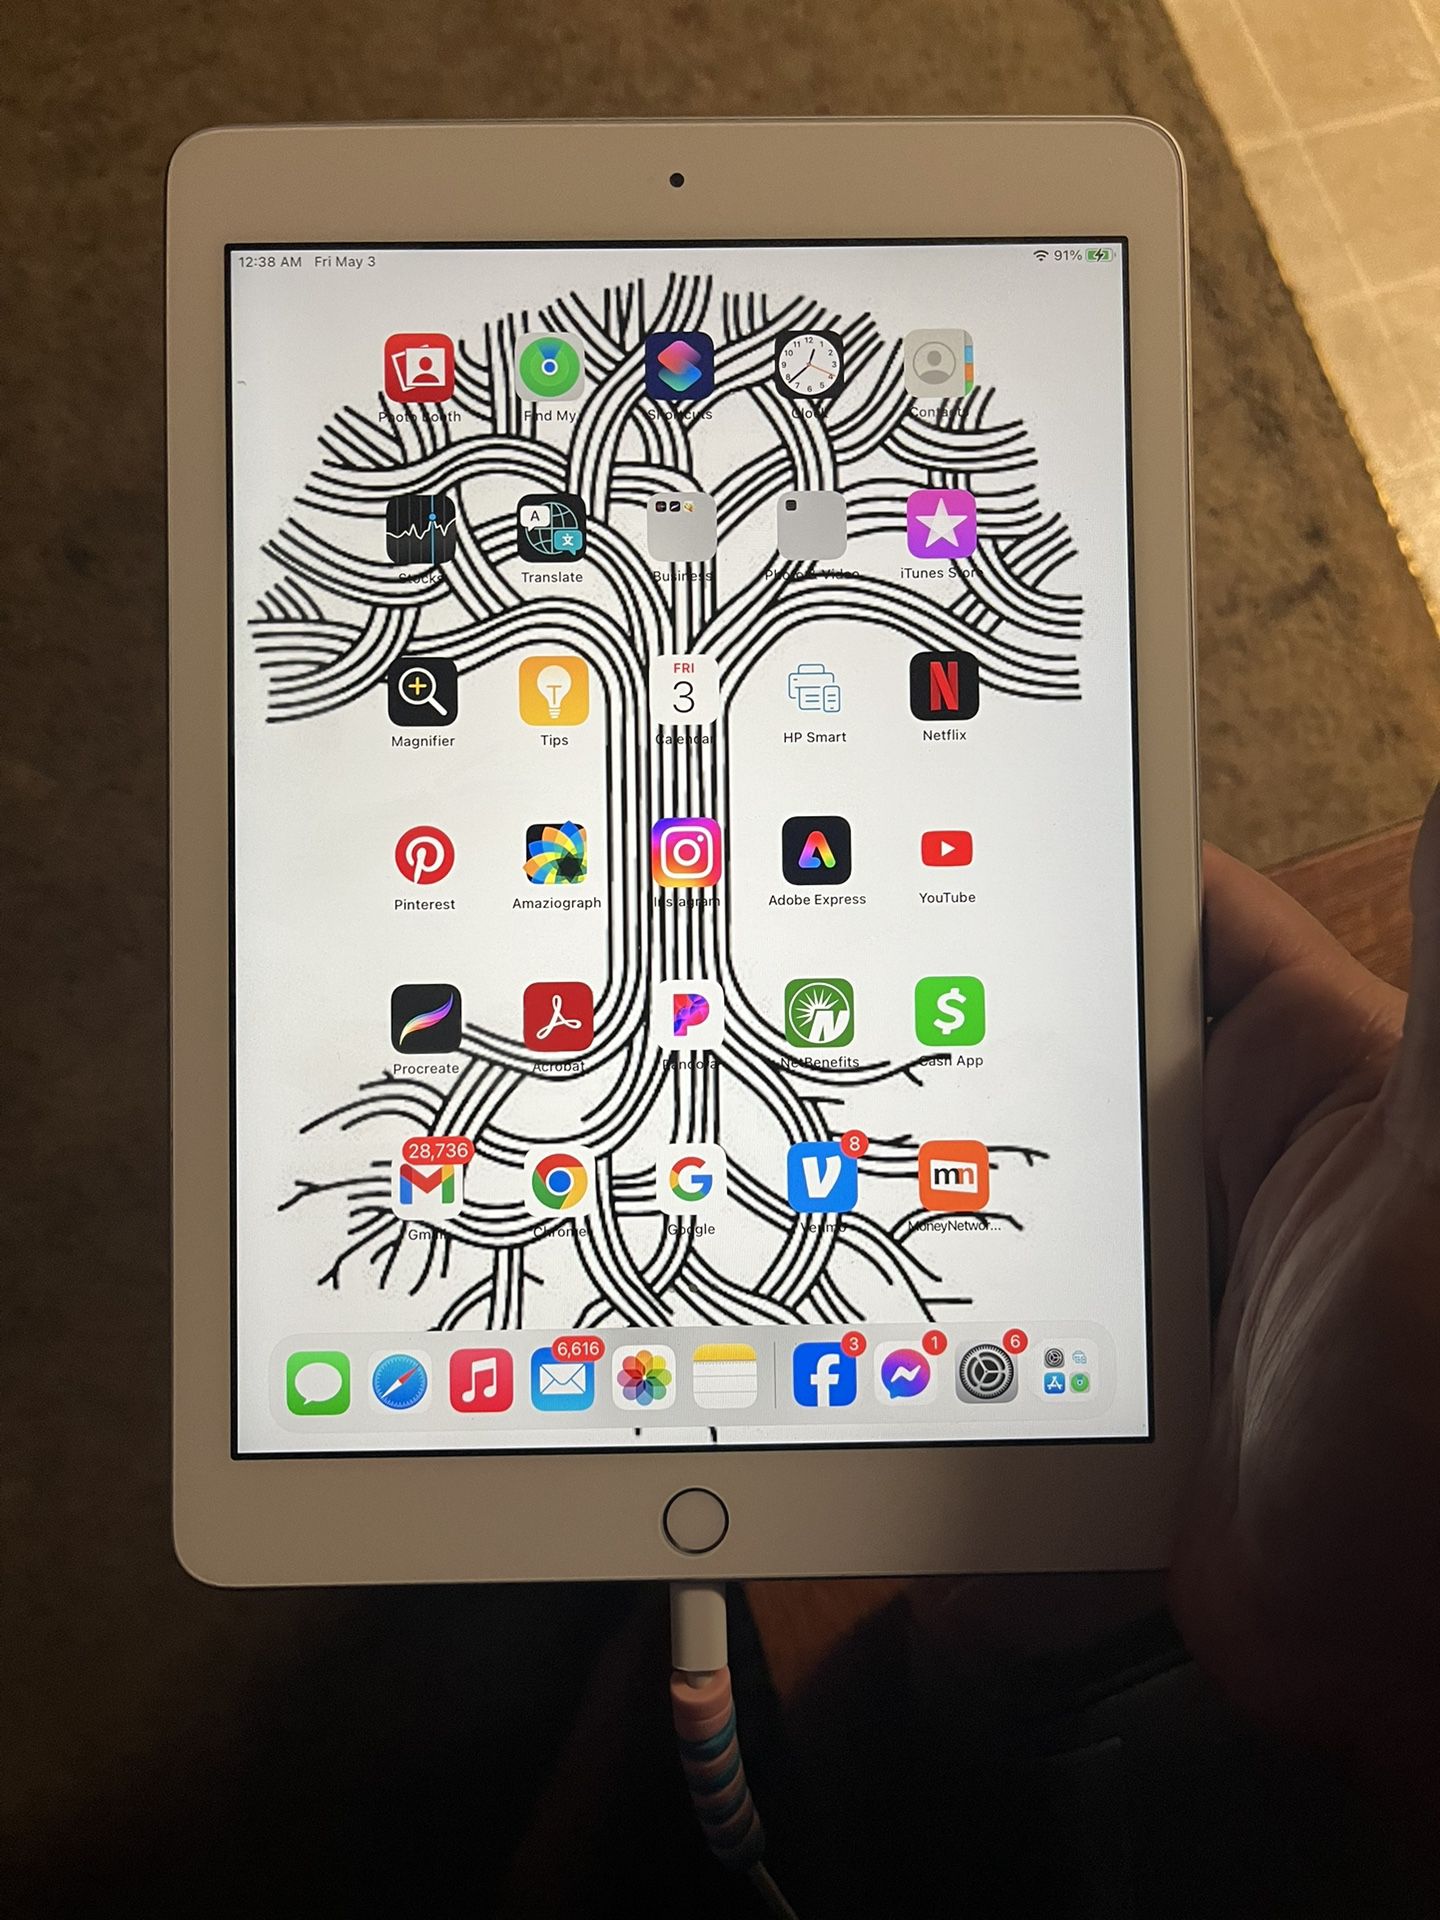 iPad 6th Generation 